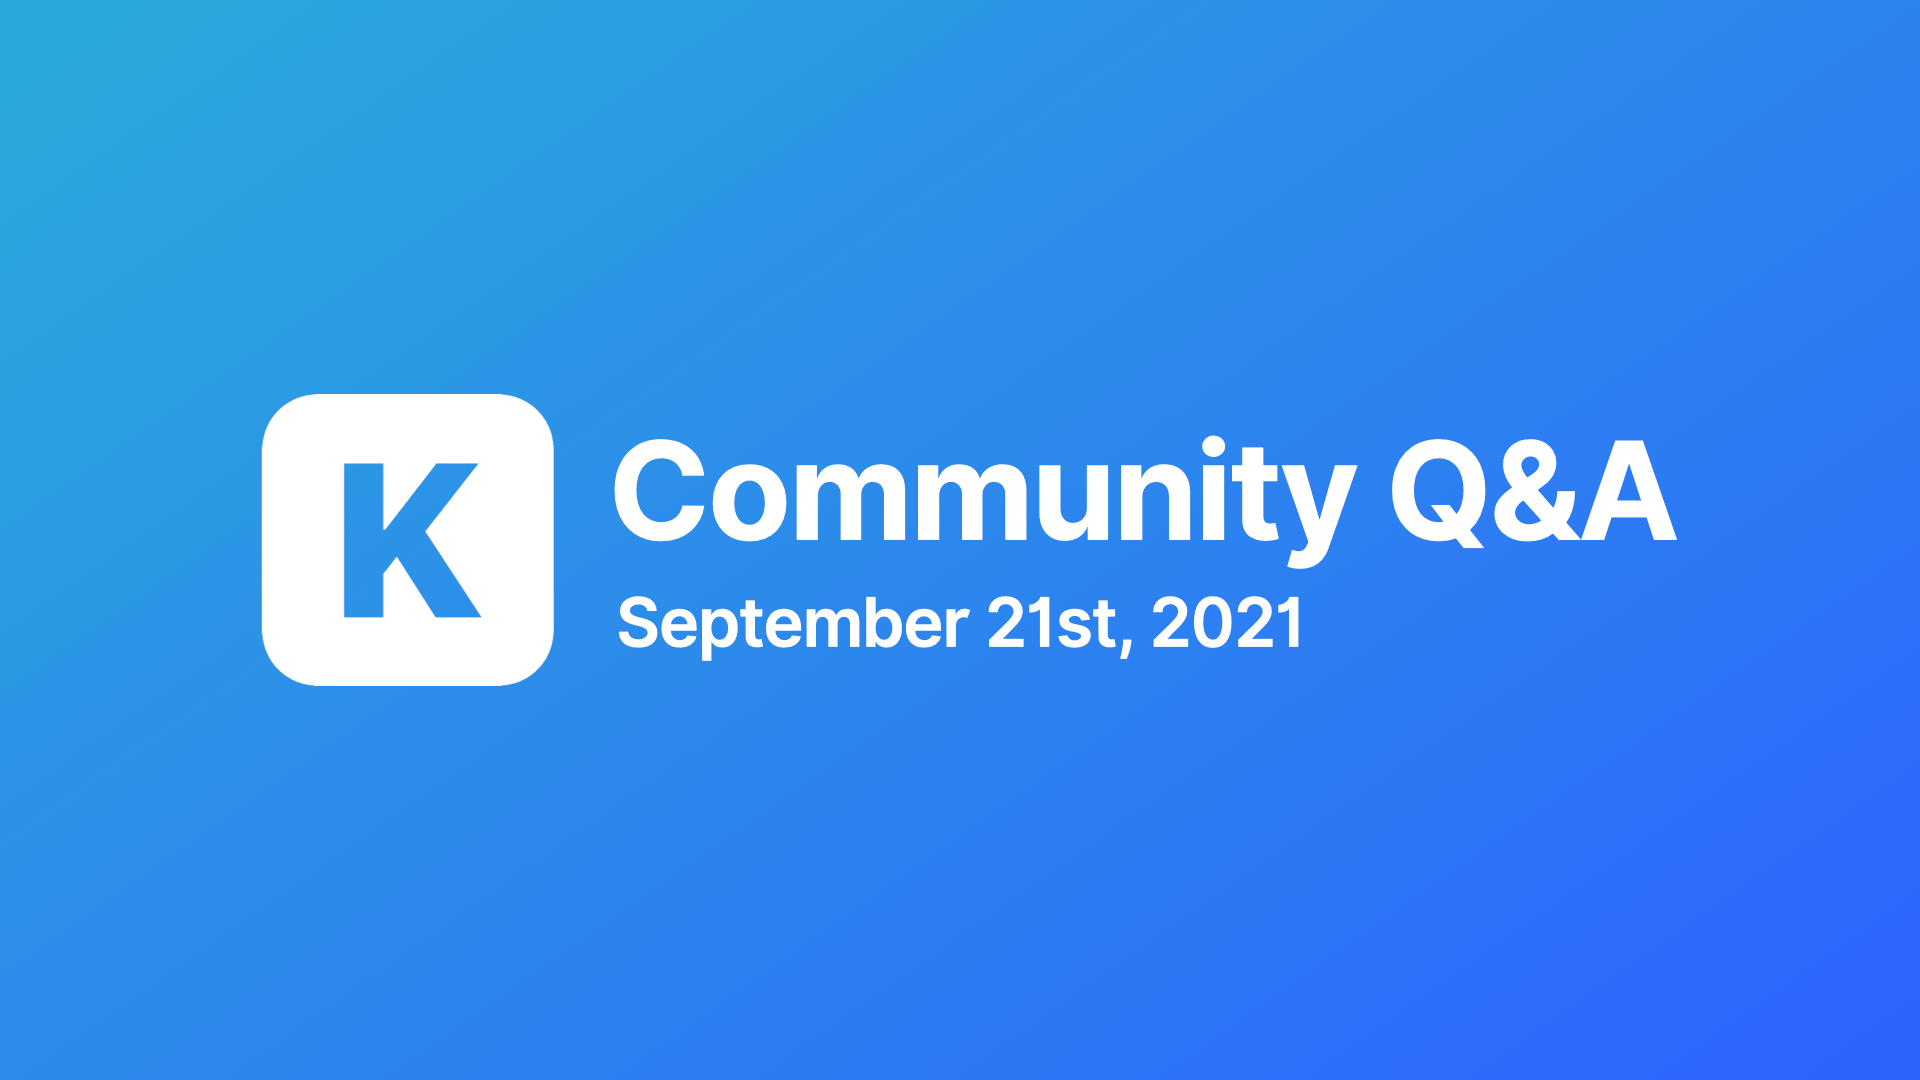 Community Q&A thumbnail showing title